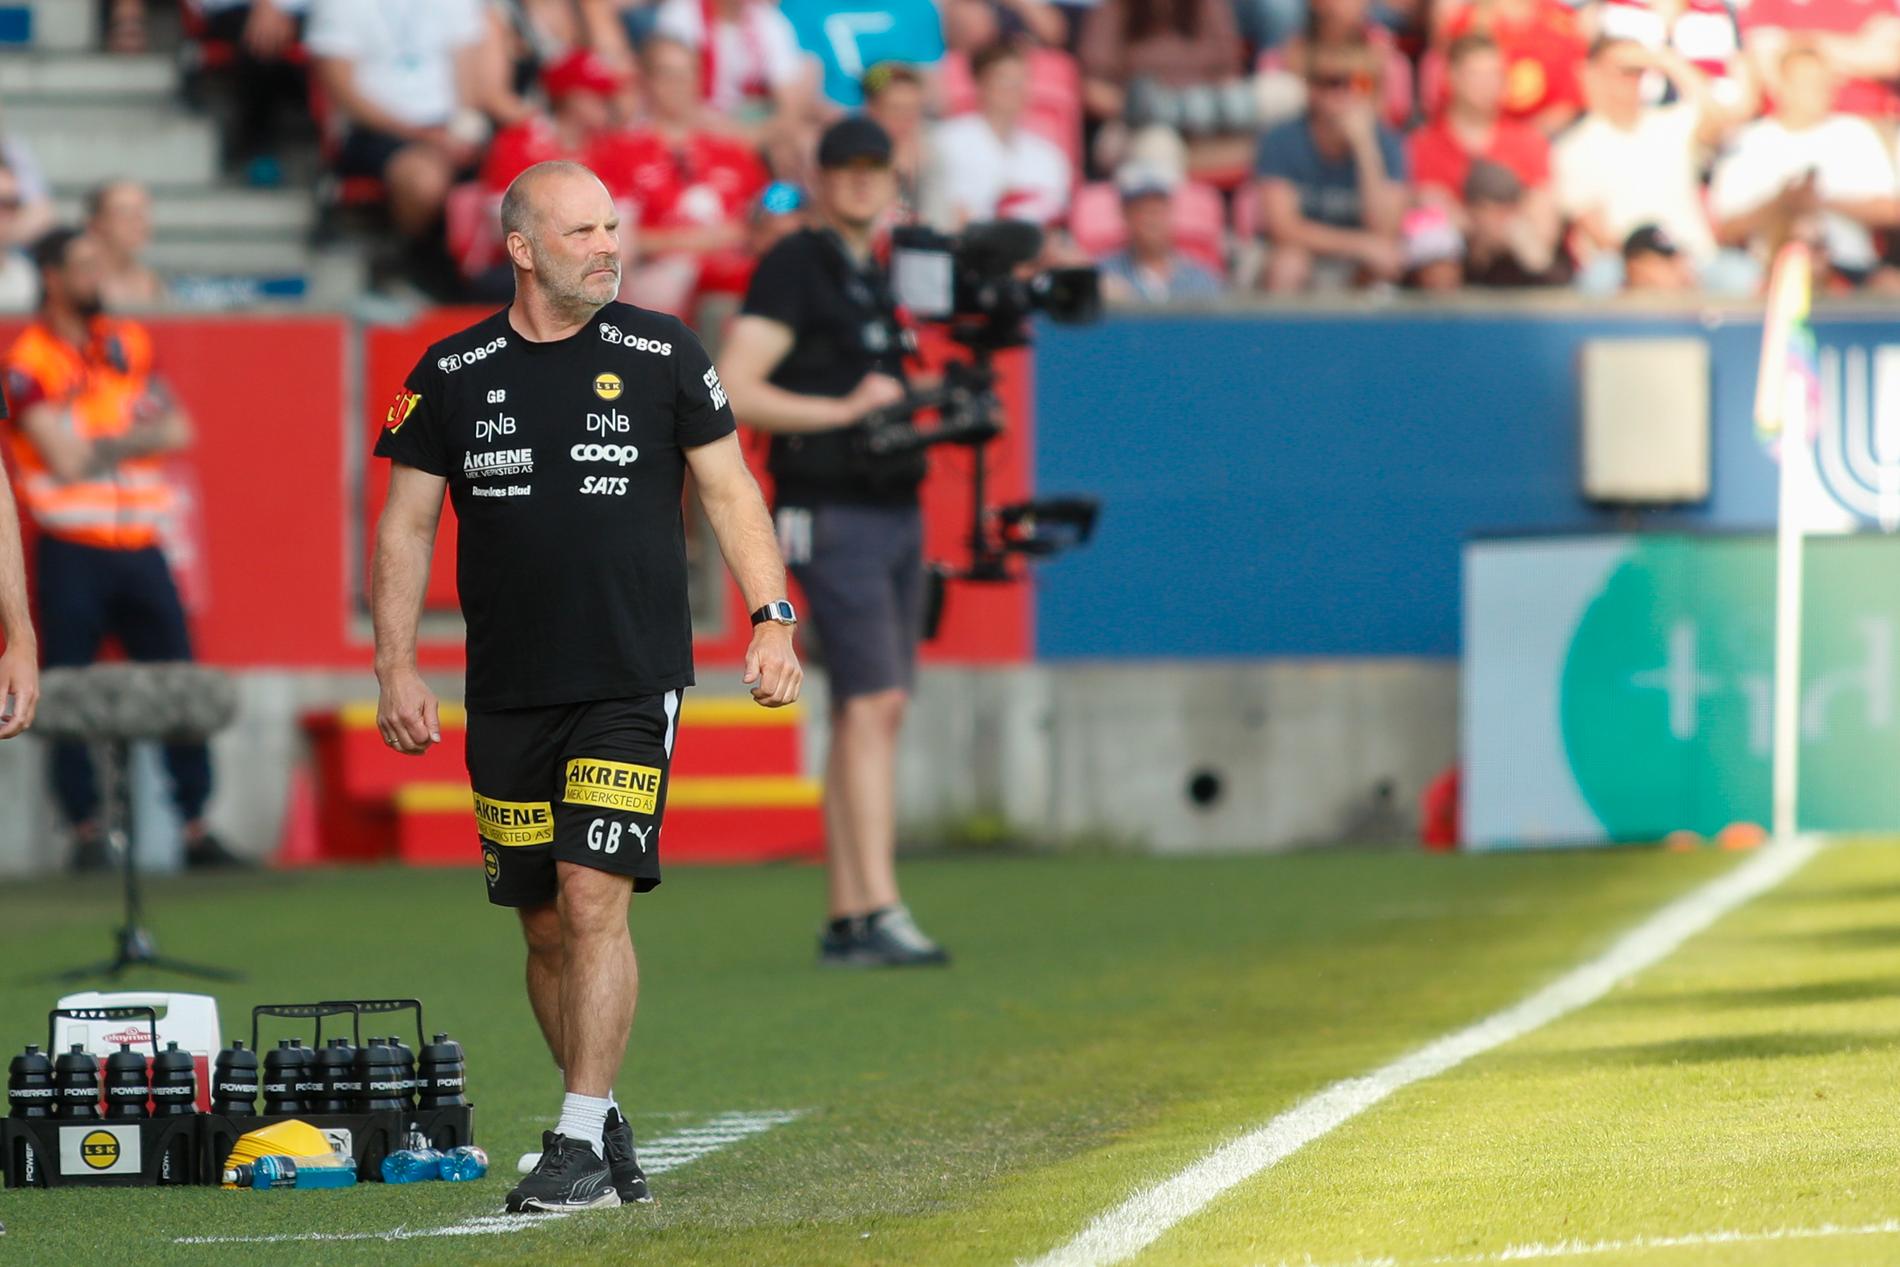 Eliteserien: Brann missed the win against Lillestrøm after a missed penalty at the end